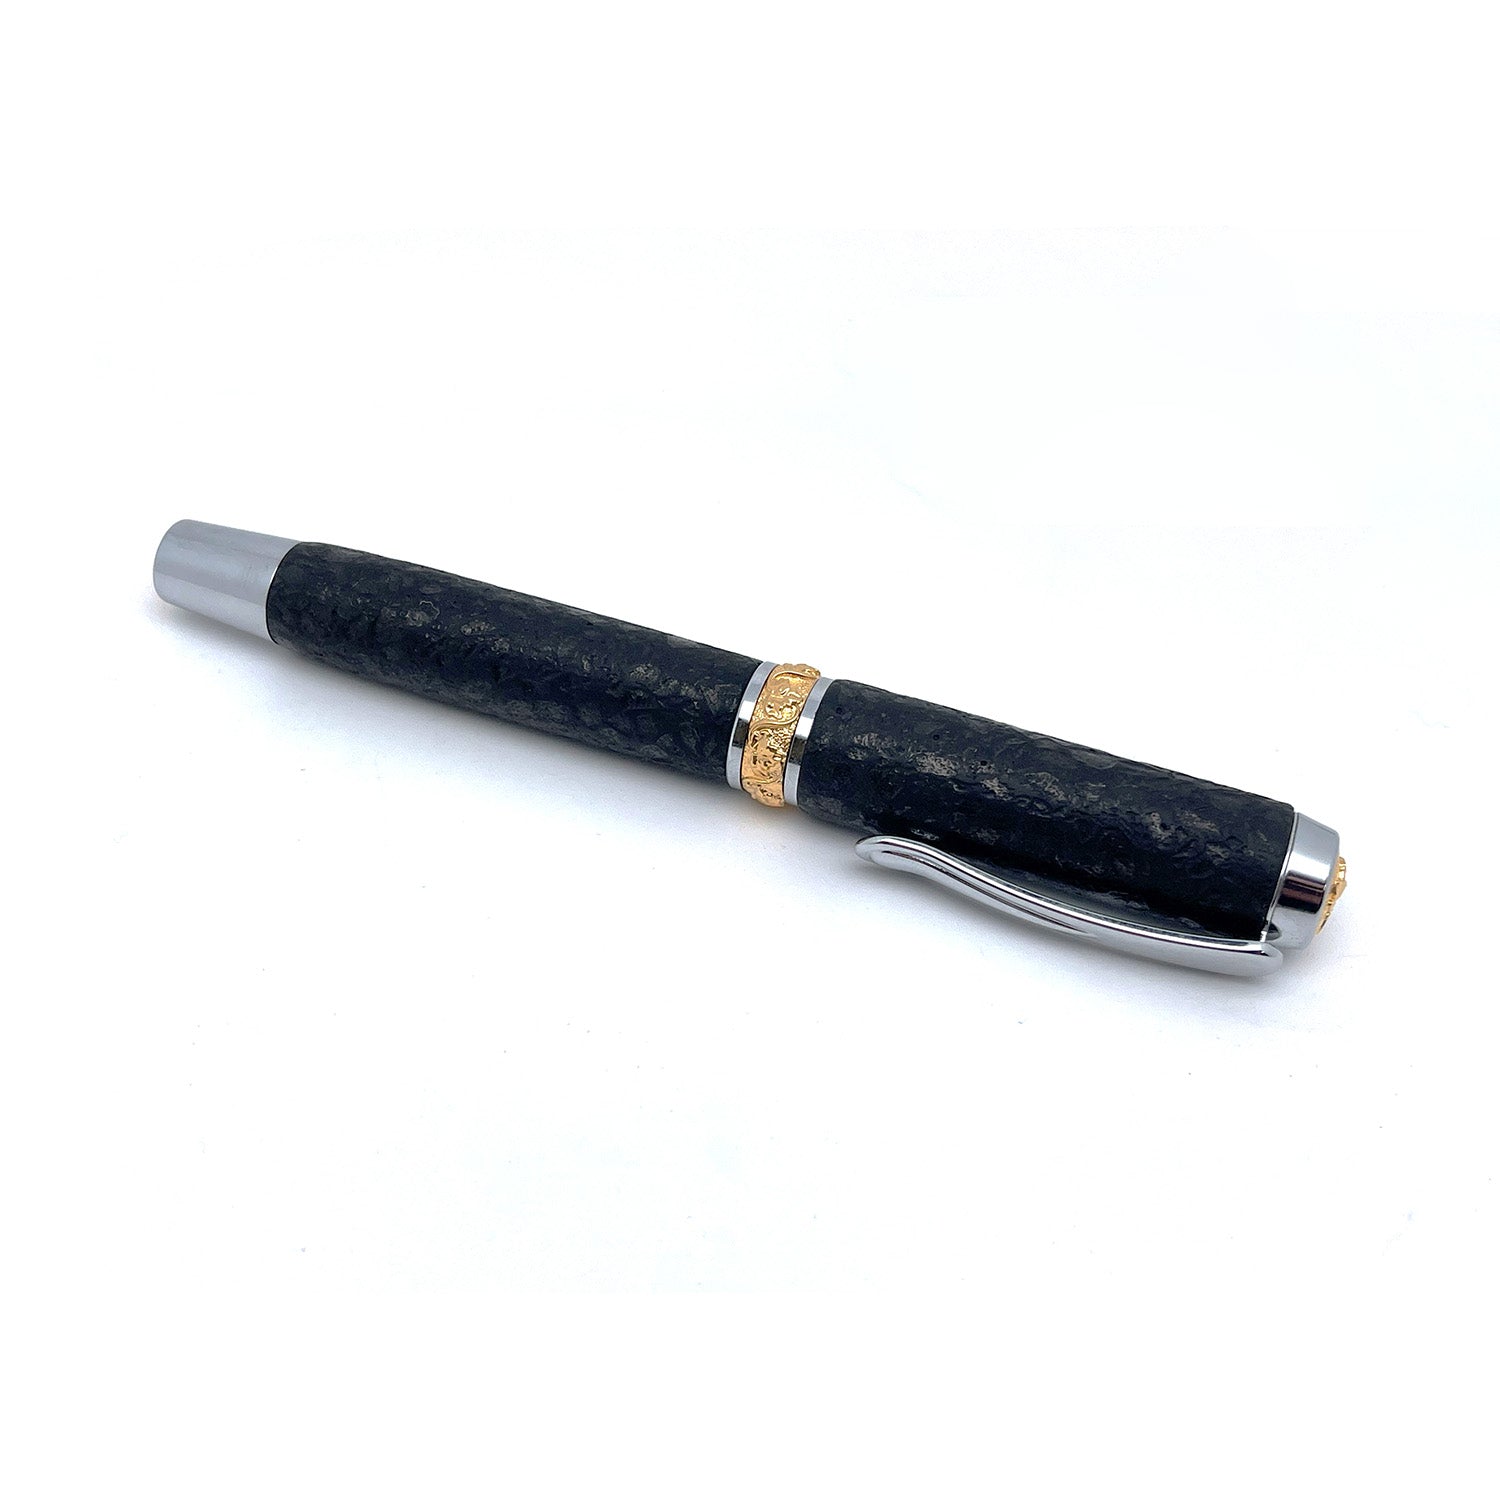 Luxury raw charcoal roller pen